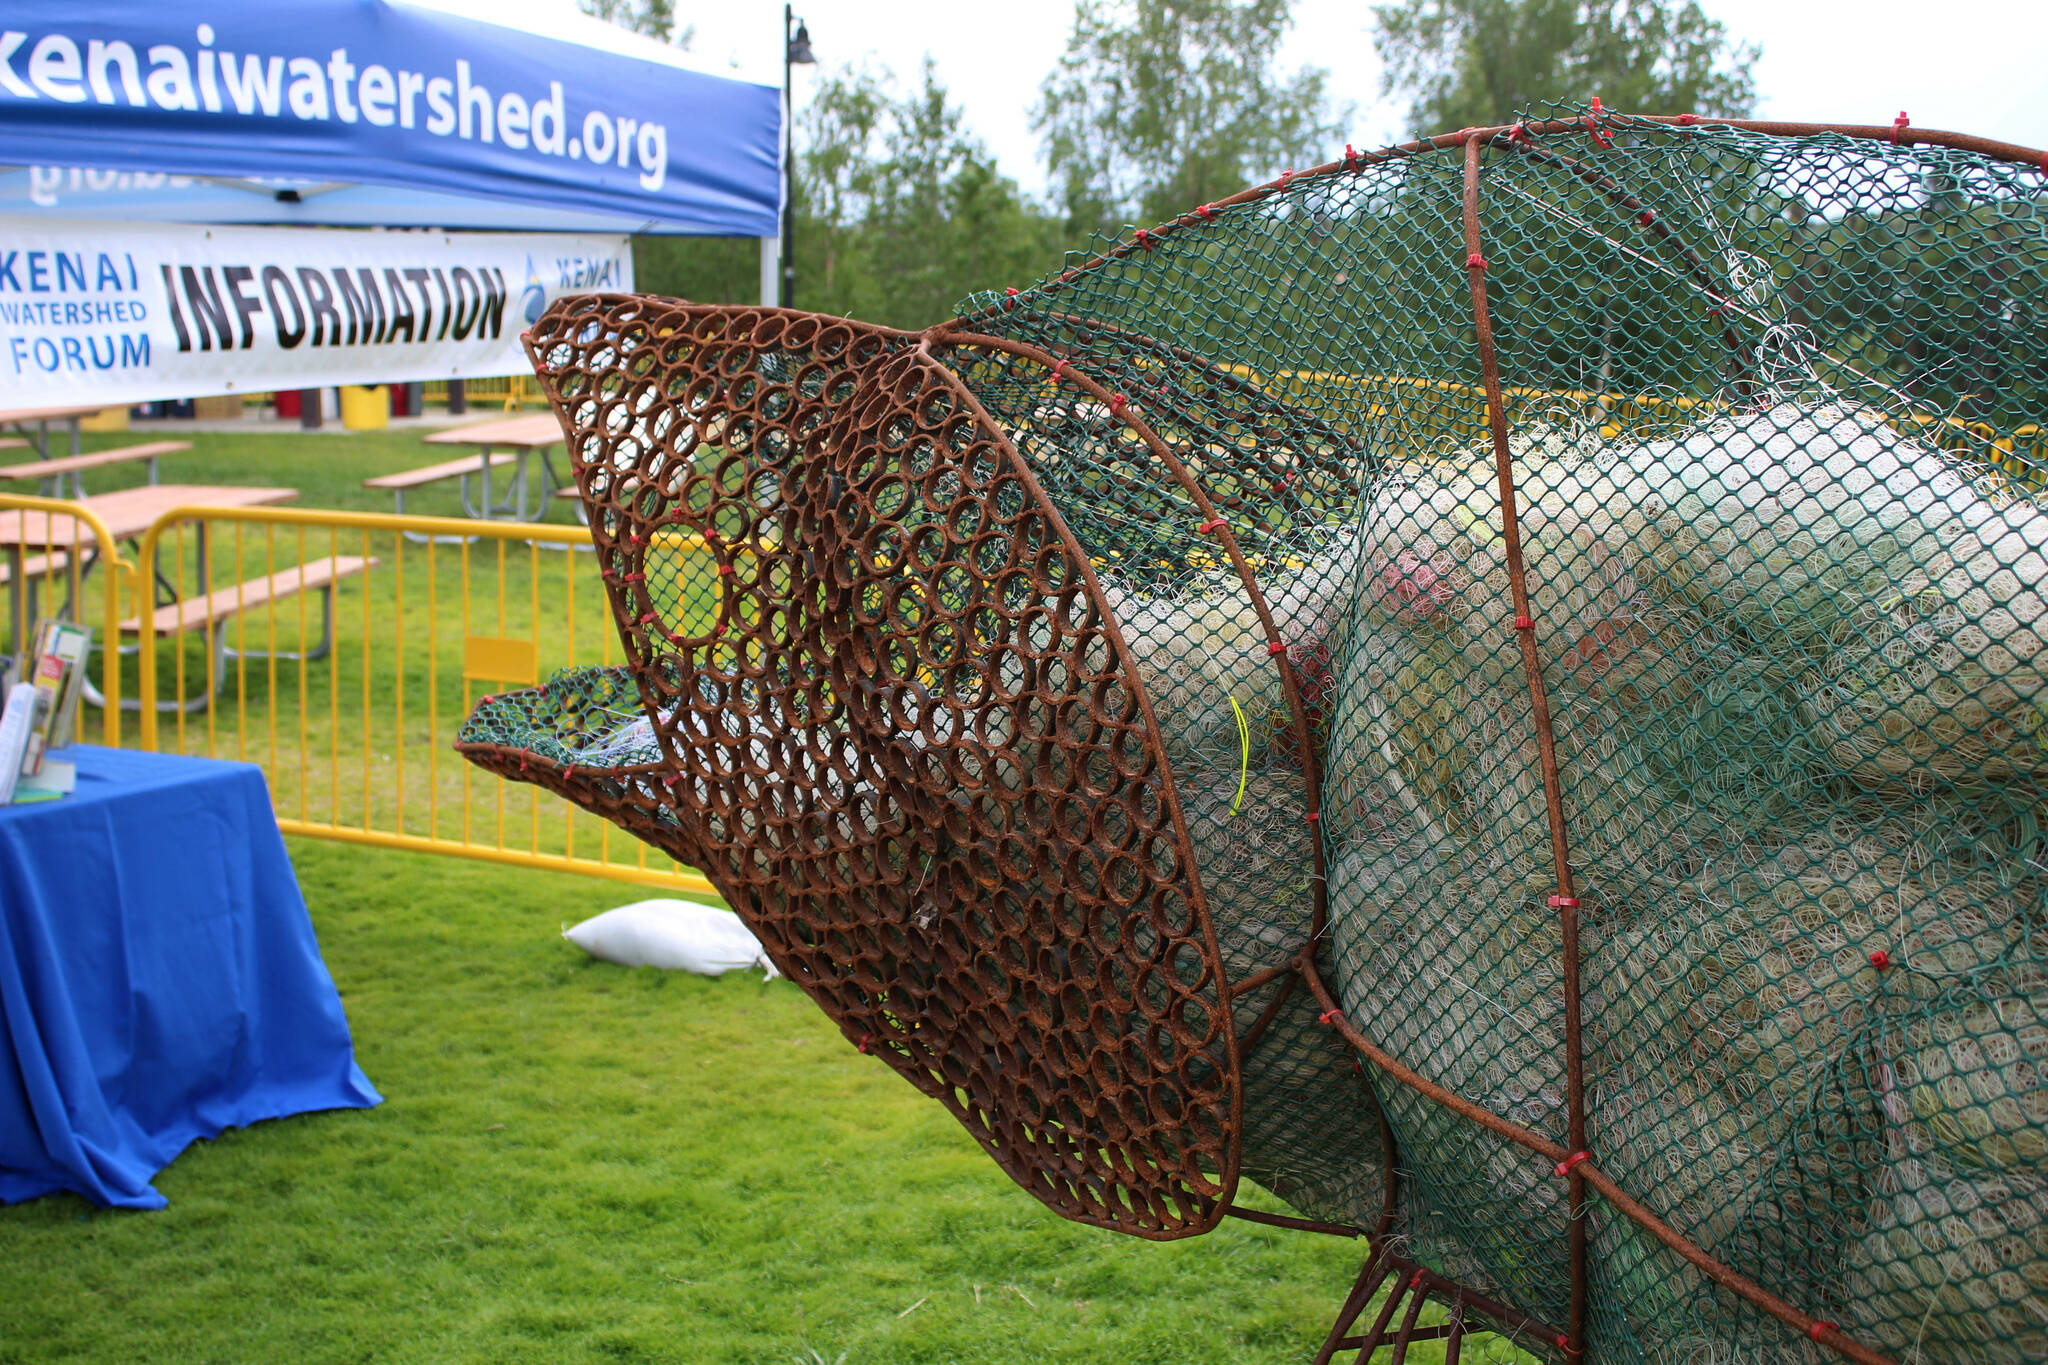 A salmon sculpture is displayed outside of the Kenai Watershed Forum tent at the 2022 Kenai River Festival on Friday, June 10, 2022 in Soldotna, Alaska. (Ashlyn O’Hara/Peninsula Clarion)